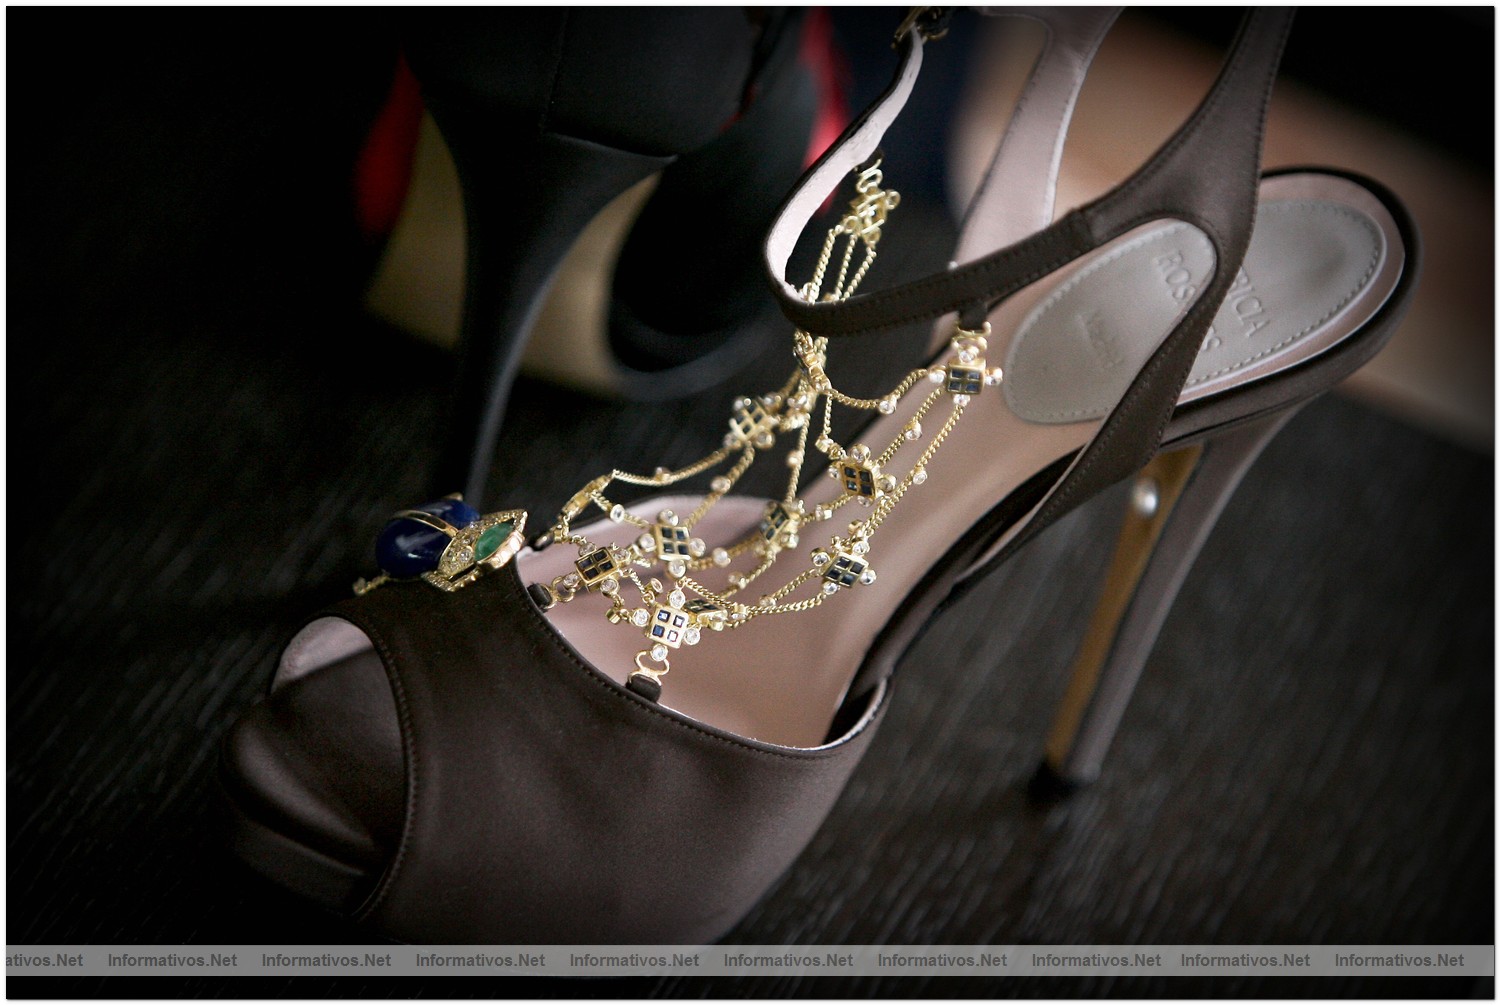 Fuenso Internacional Shoes Design Award 2010: Patricia Rosales, premio Joven Promesa (diseño de calzado Alta Costura)